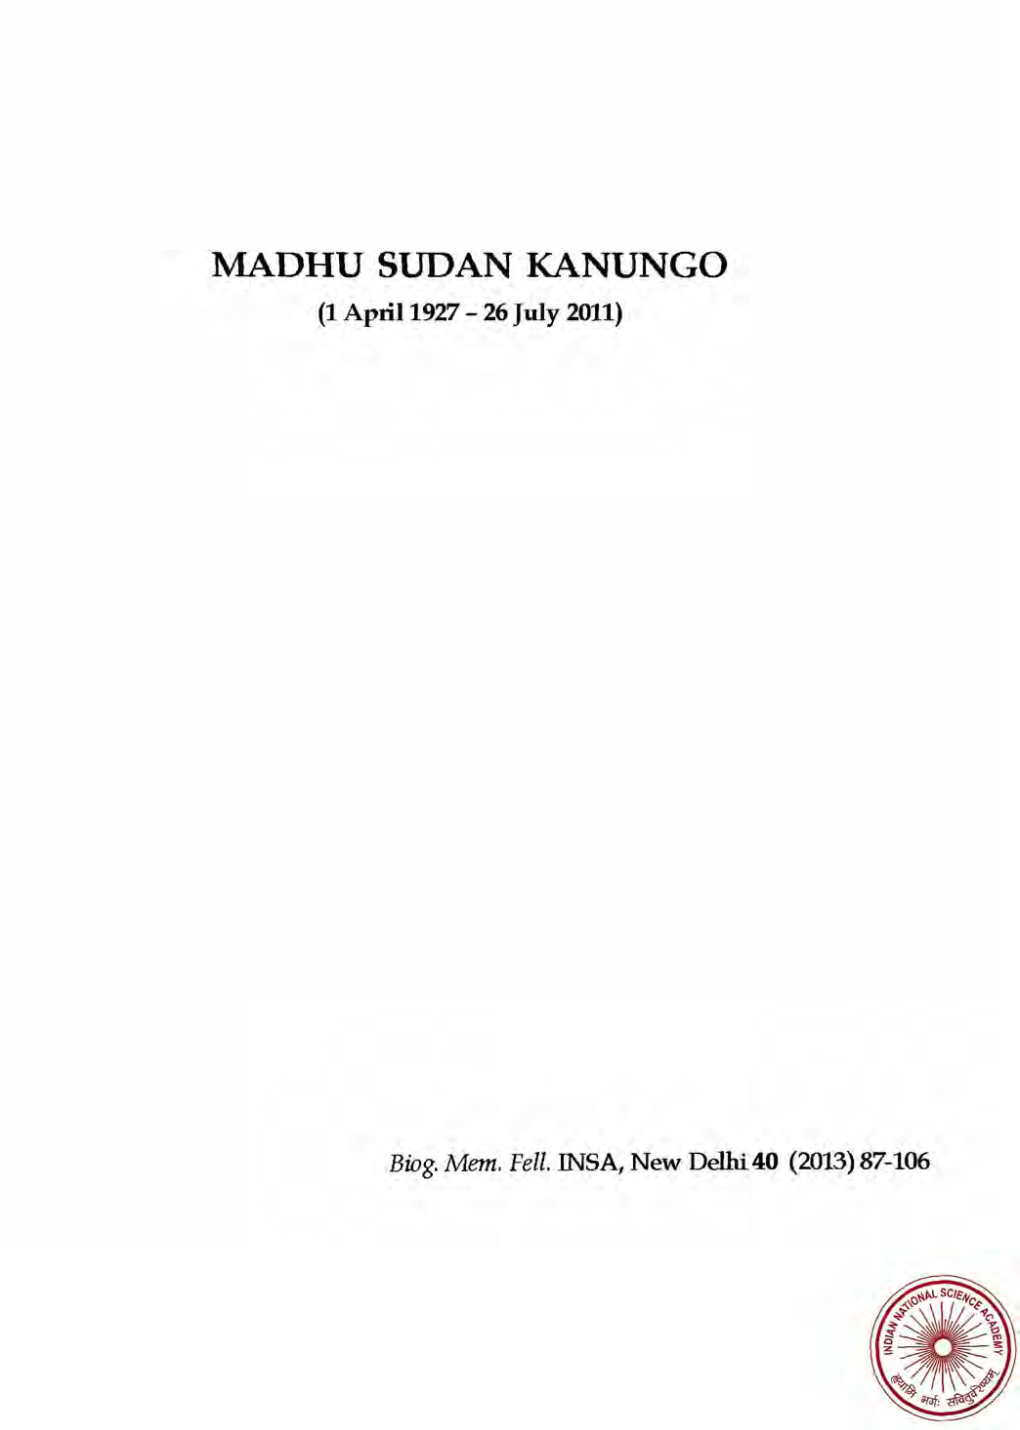 MADHU SUDAN KANUNGO (1 April 1927 - 26 July 2011)